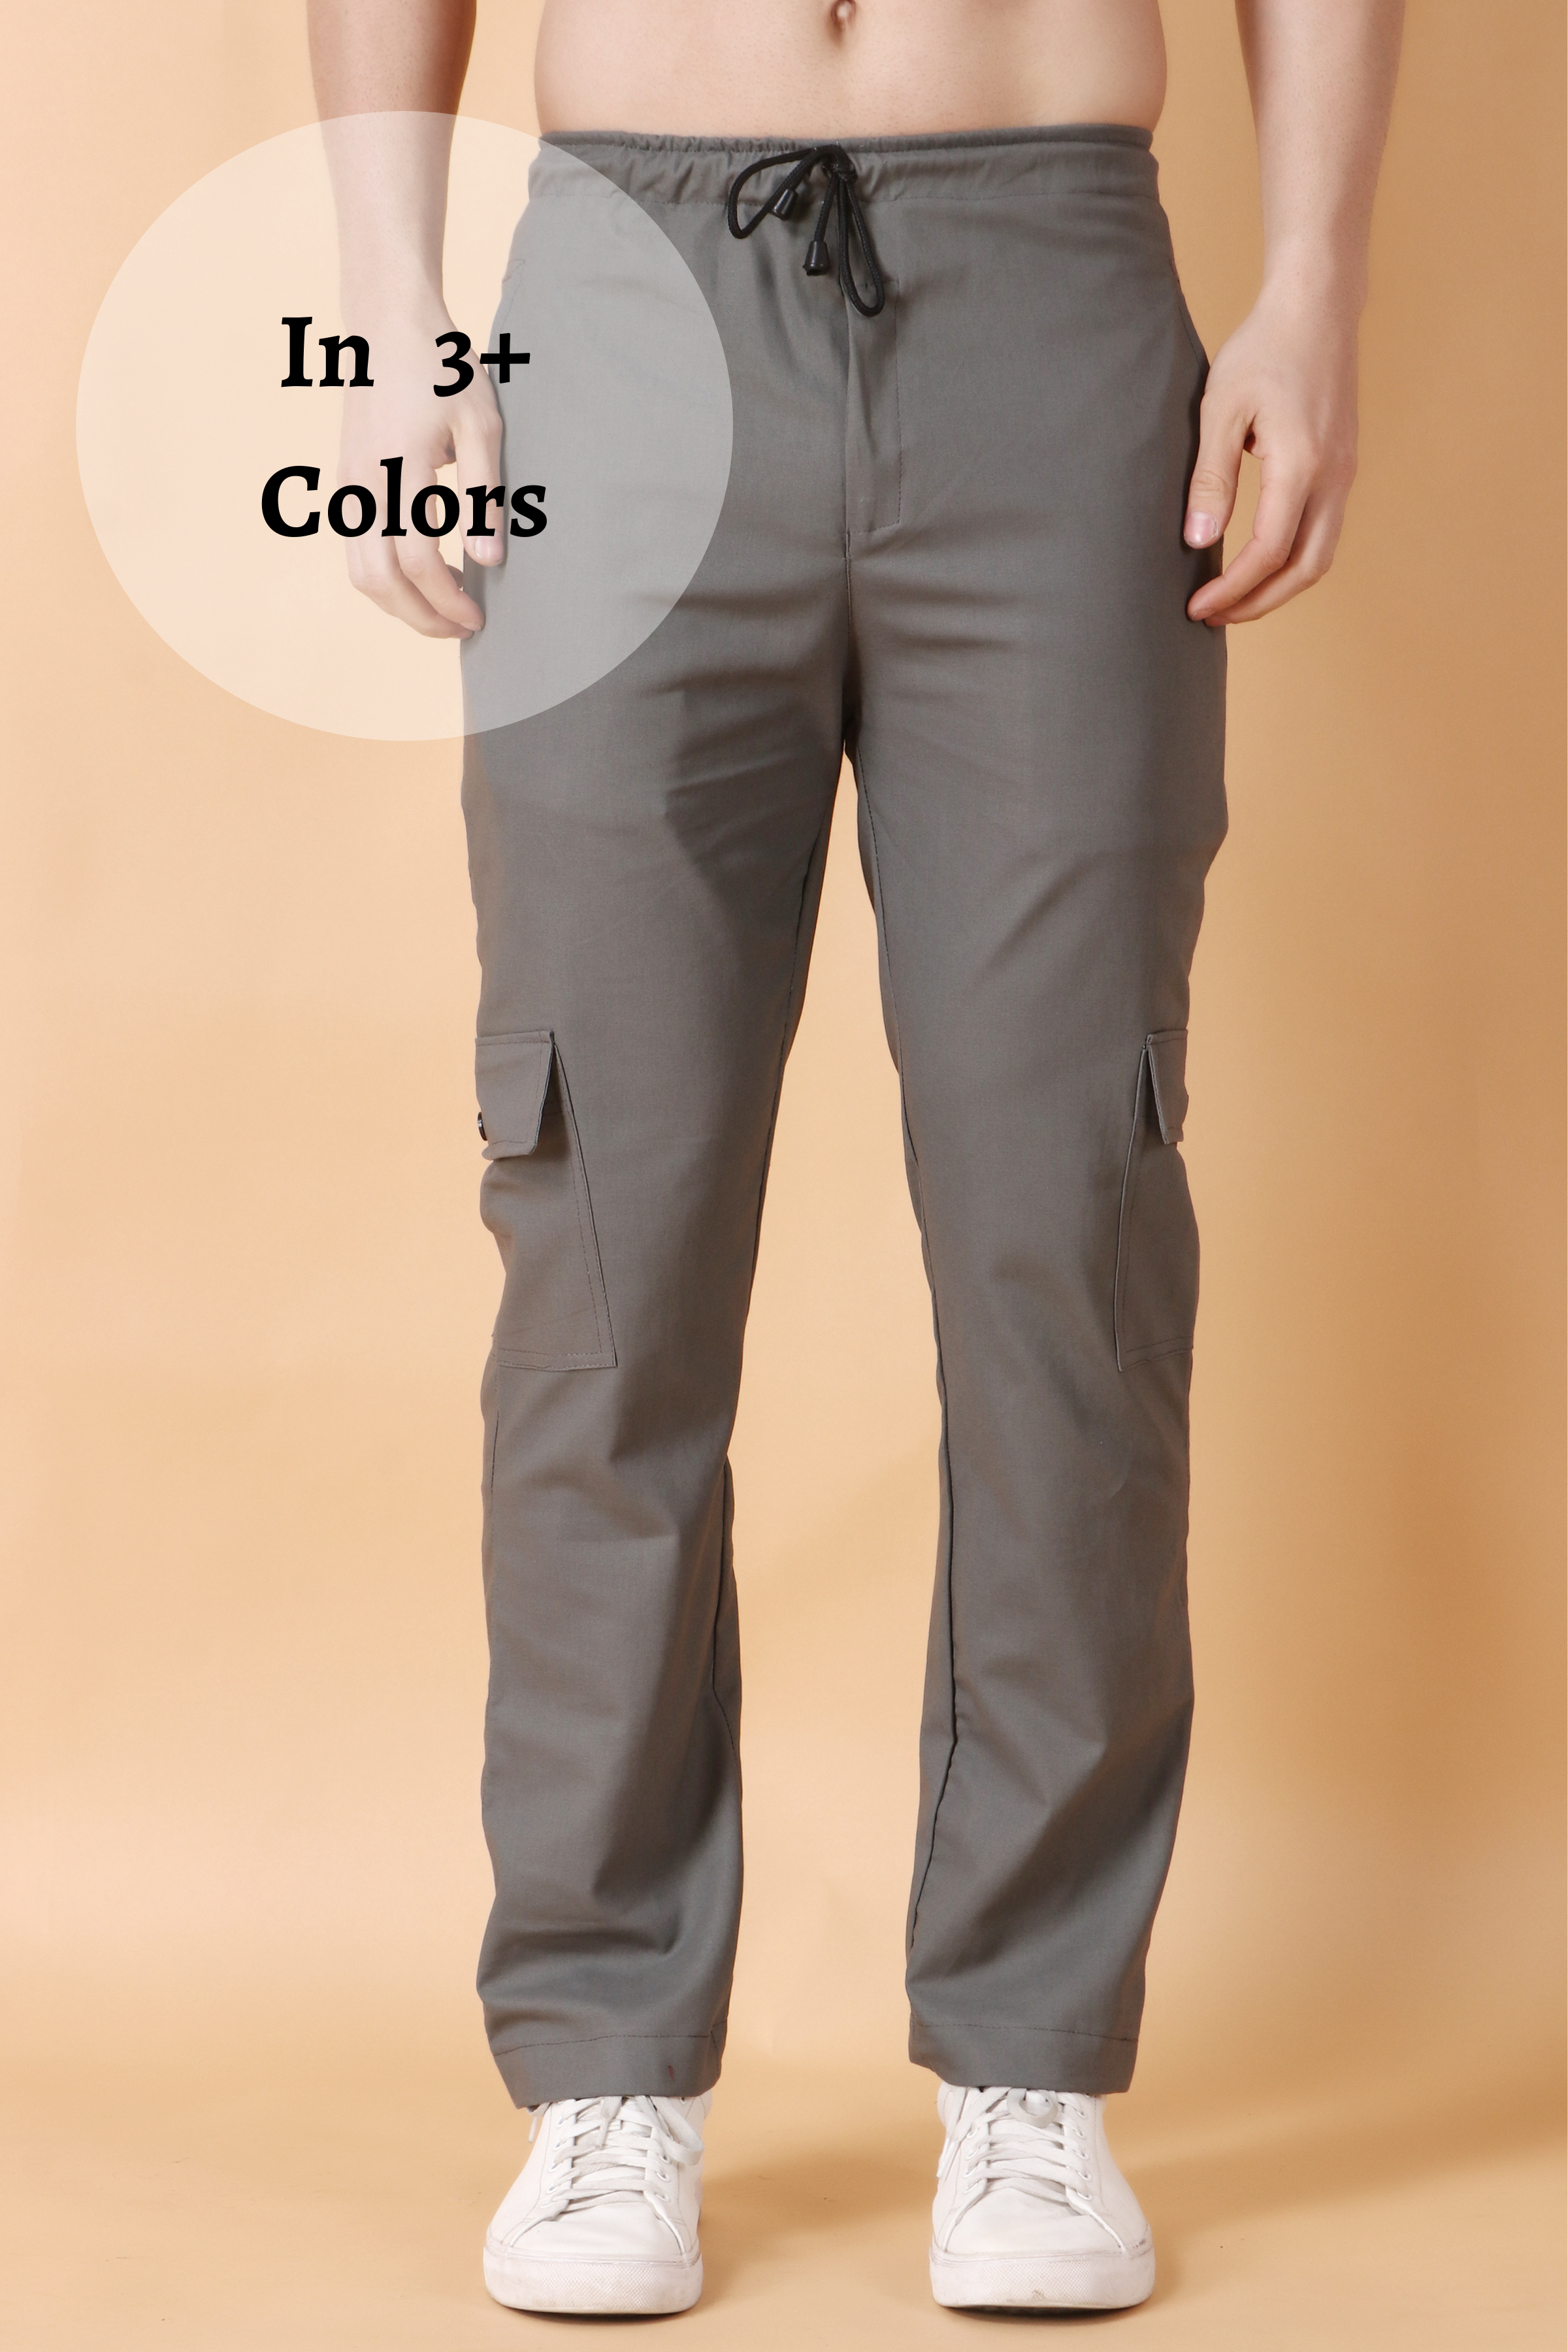 New Women's cotton Cargo Pants Leisure Trousers more Pocket pants | Wish